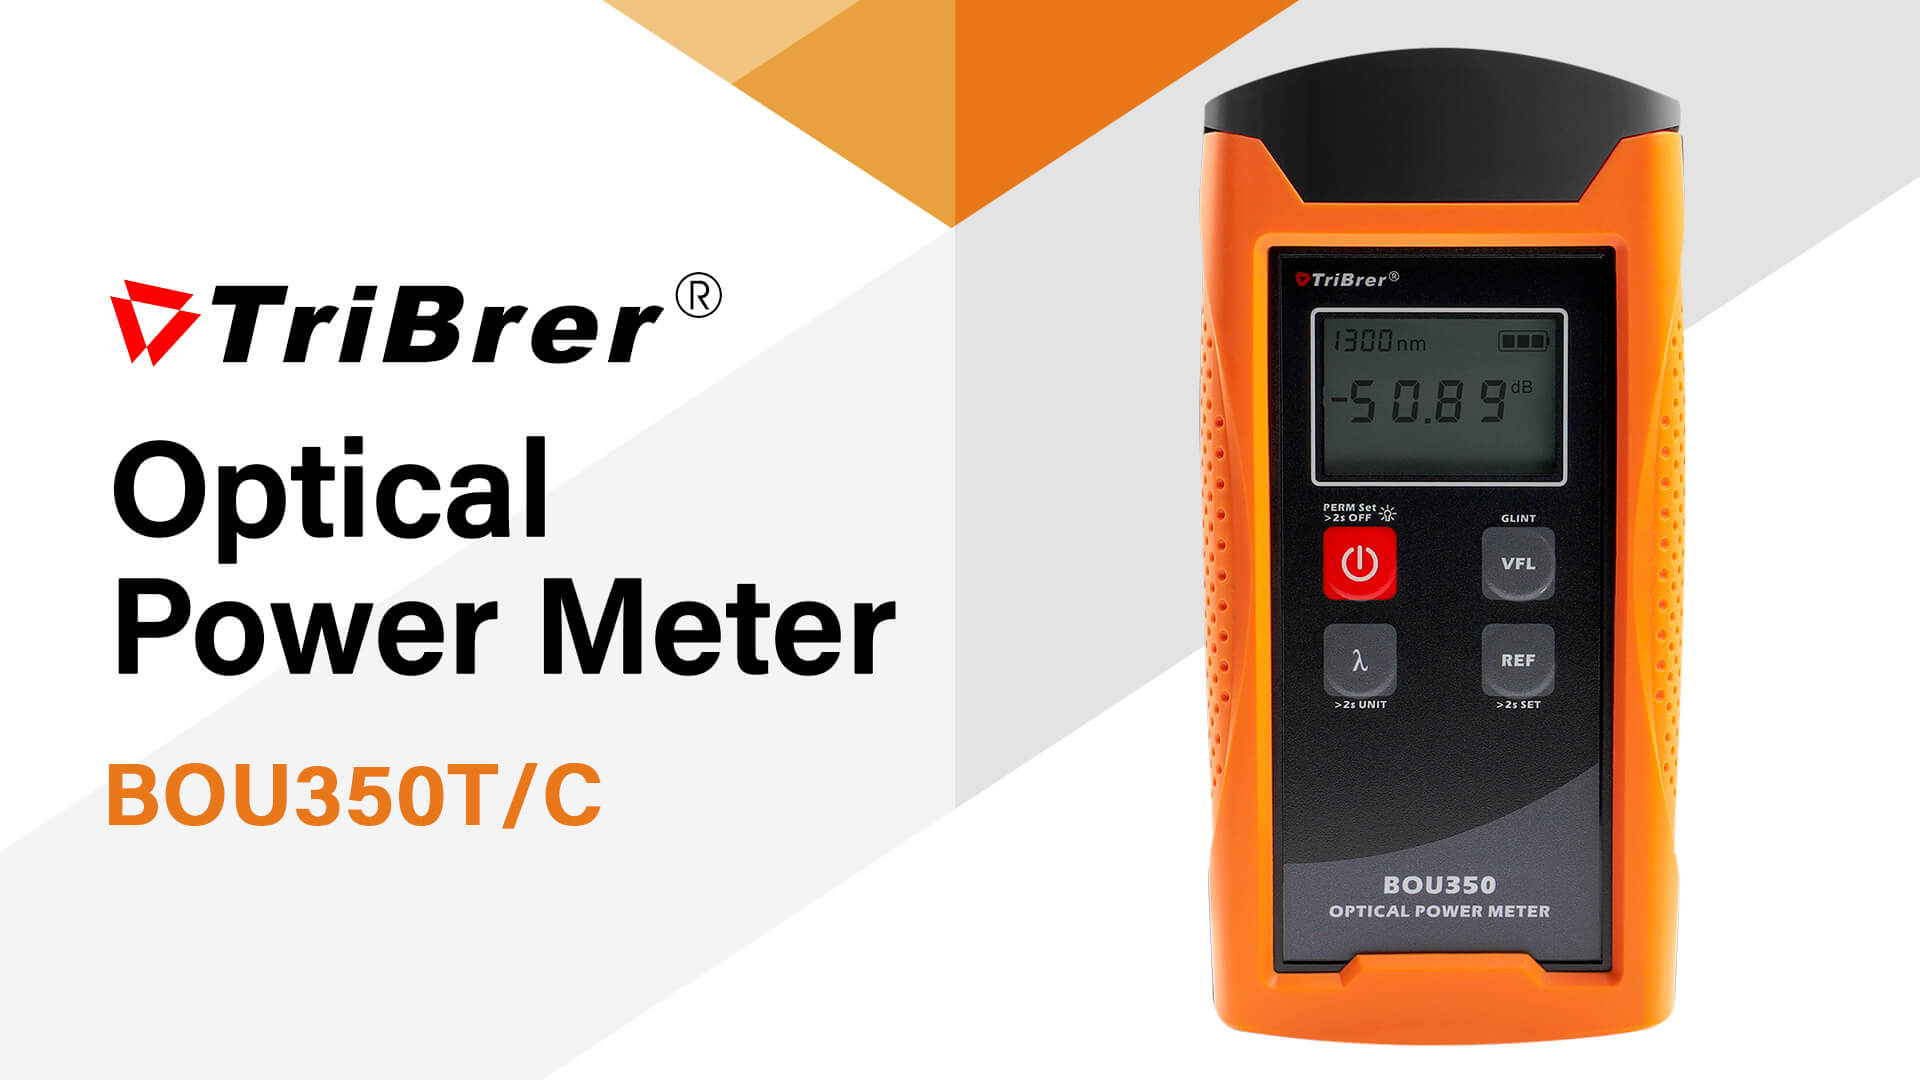 FeaturedImage_Tribrer_OpticalPowerMeter min